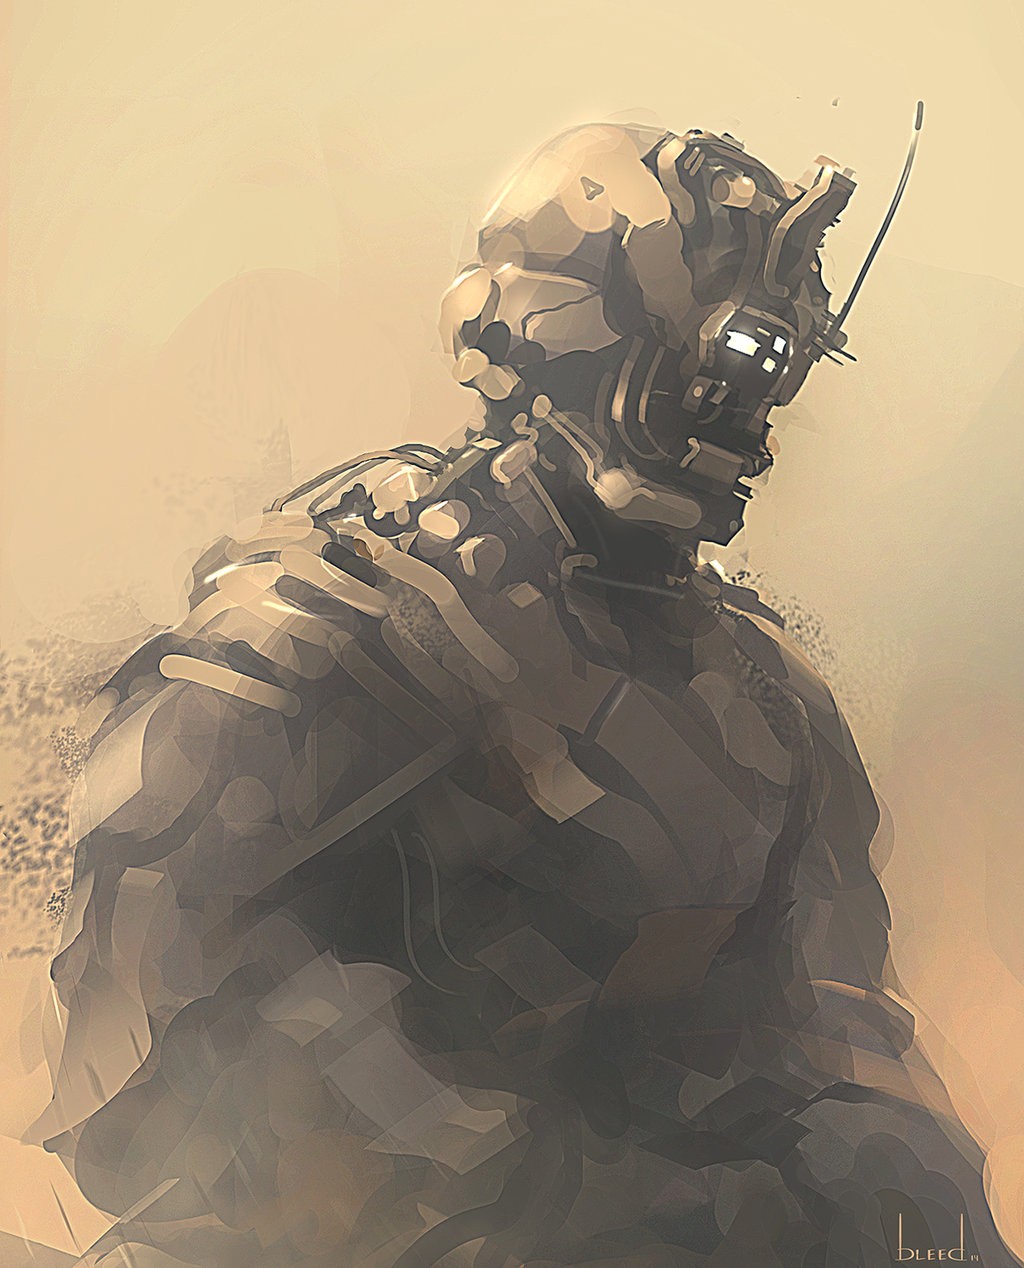 General 1024x1268 blee-d (Bryan) artwork soldier sand science fiction futuristic beige